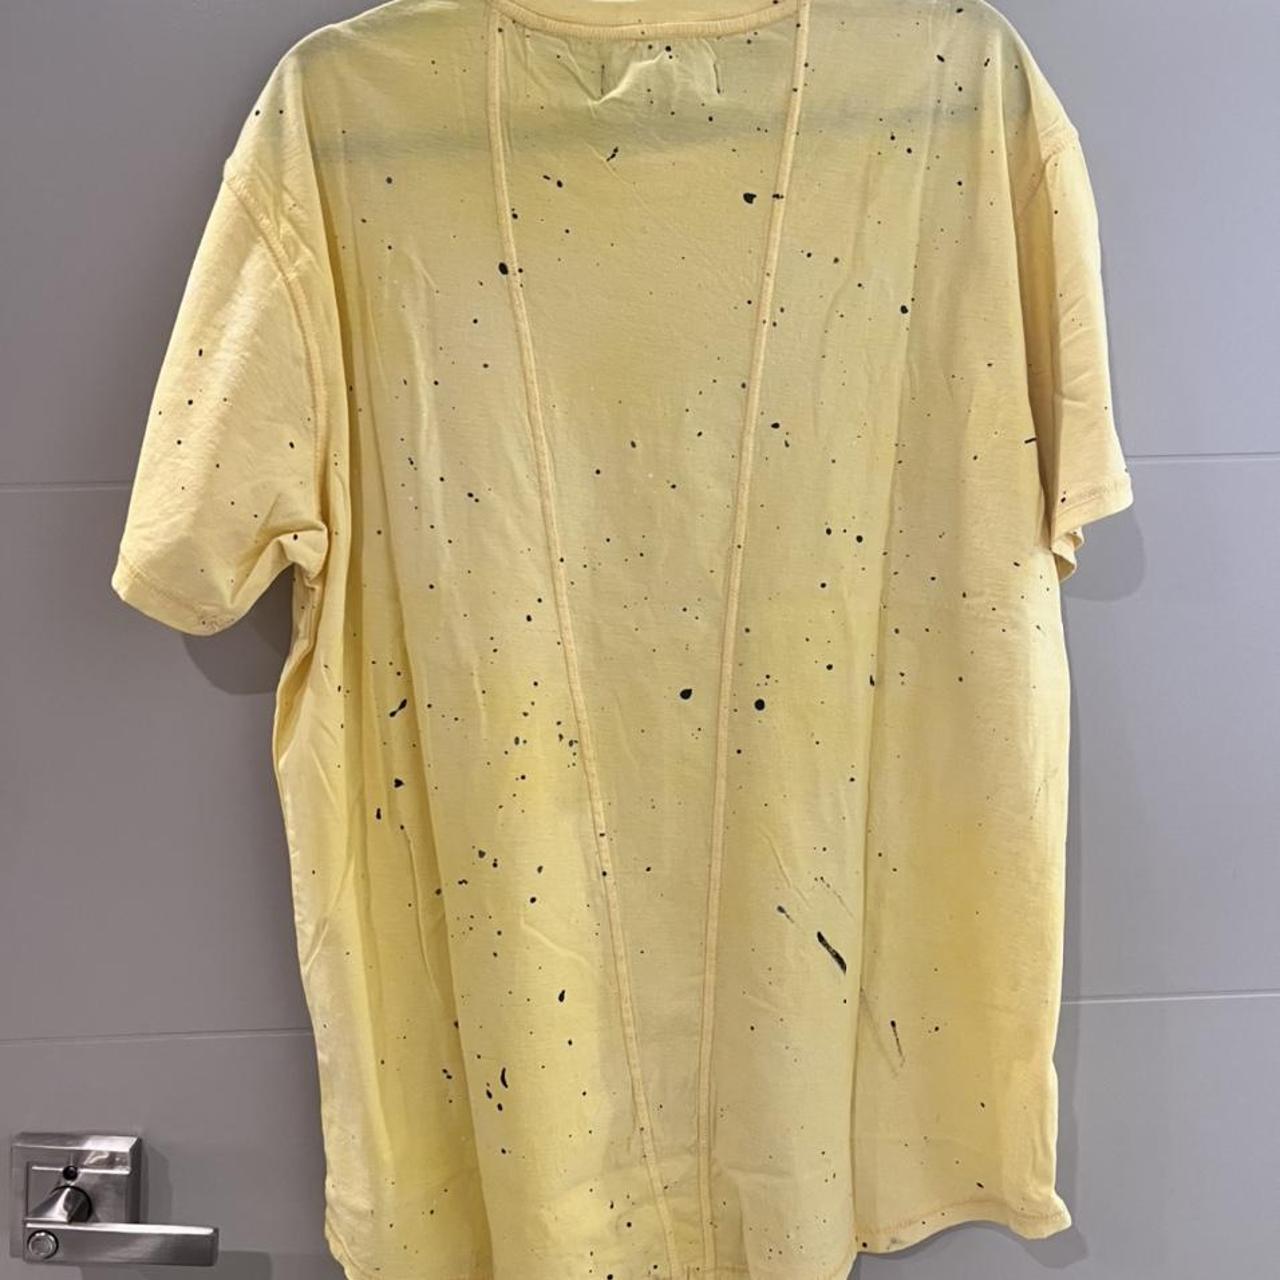 Hudson Jeans Men's Yellow Shirt (2)